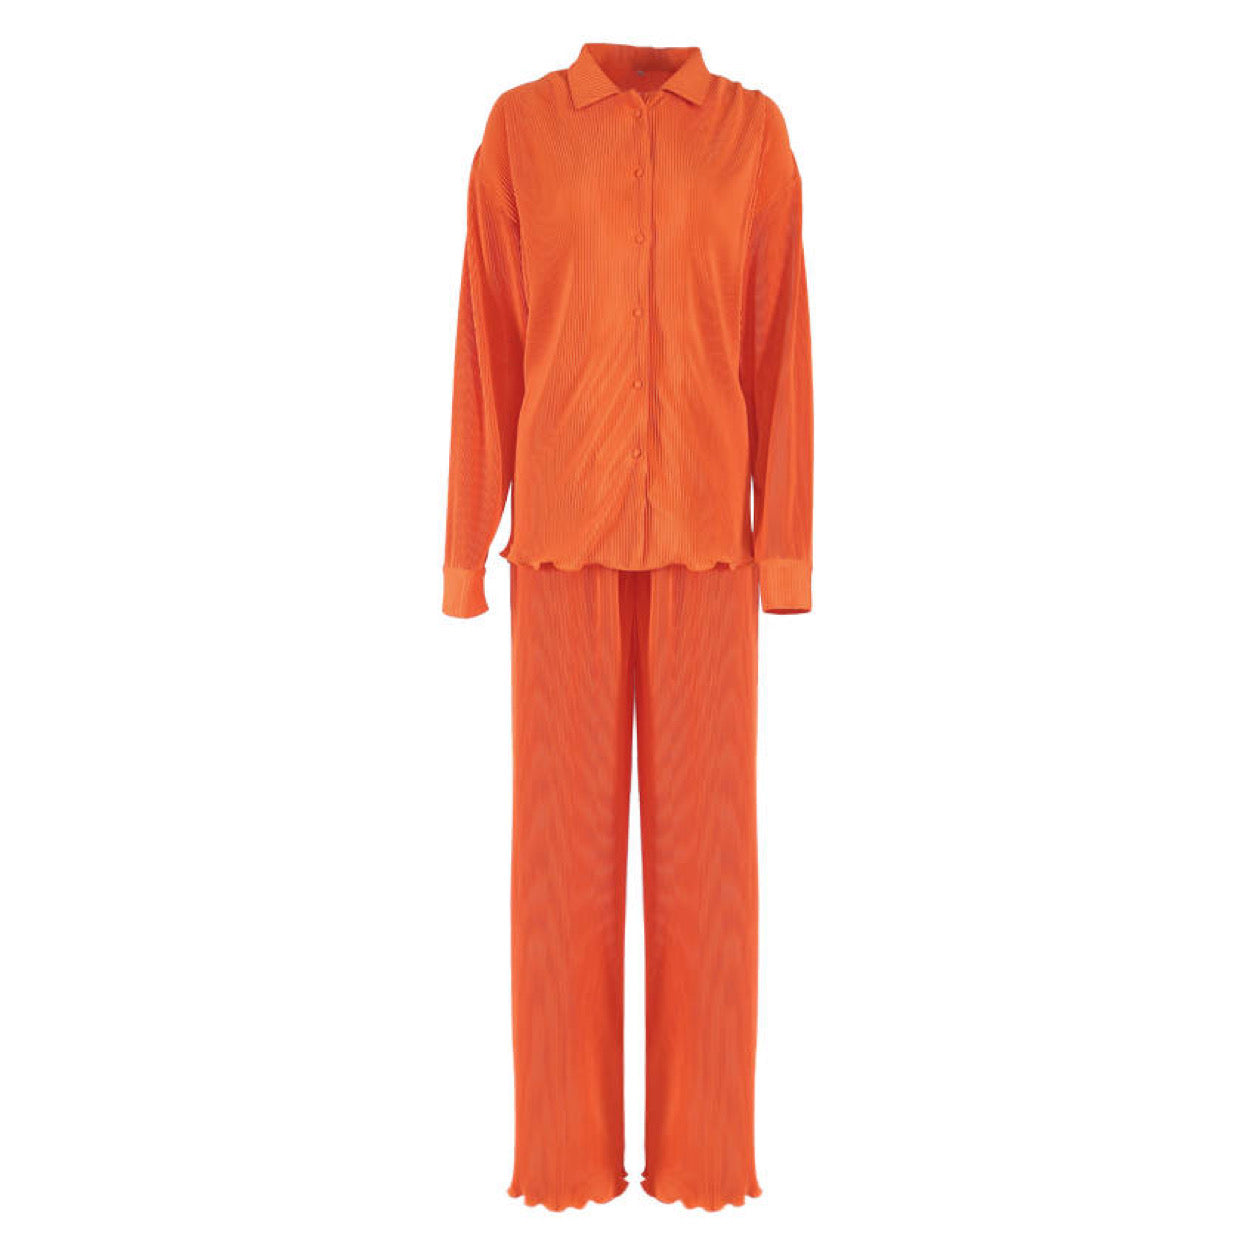 Orange wide leg and shirt set